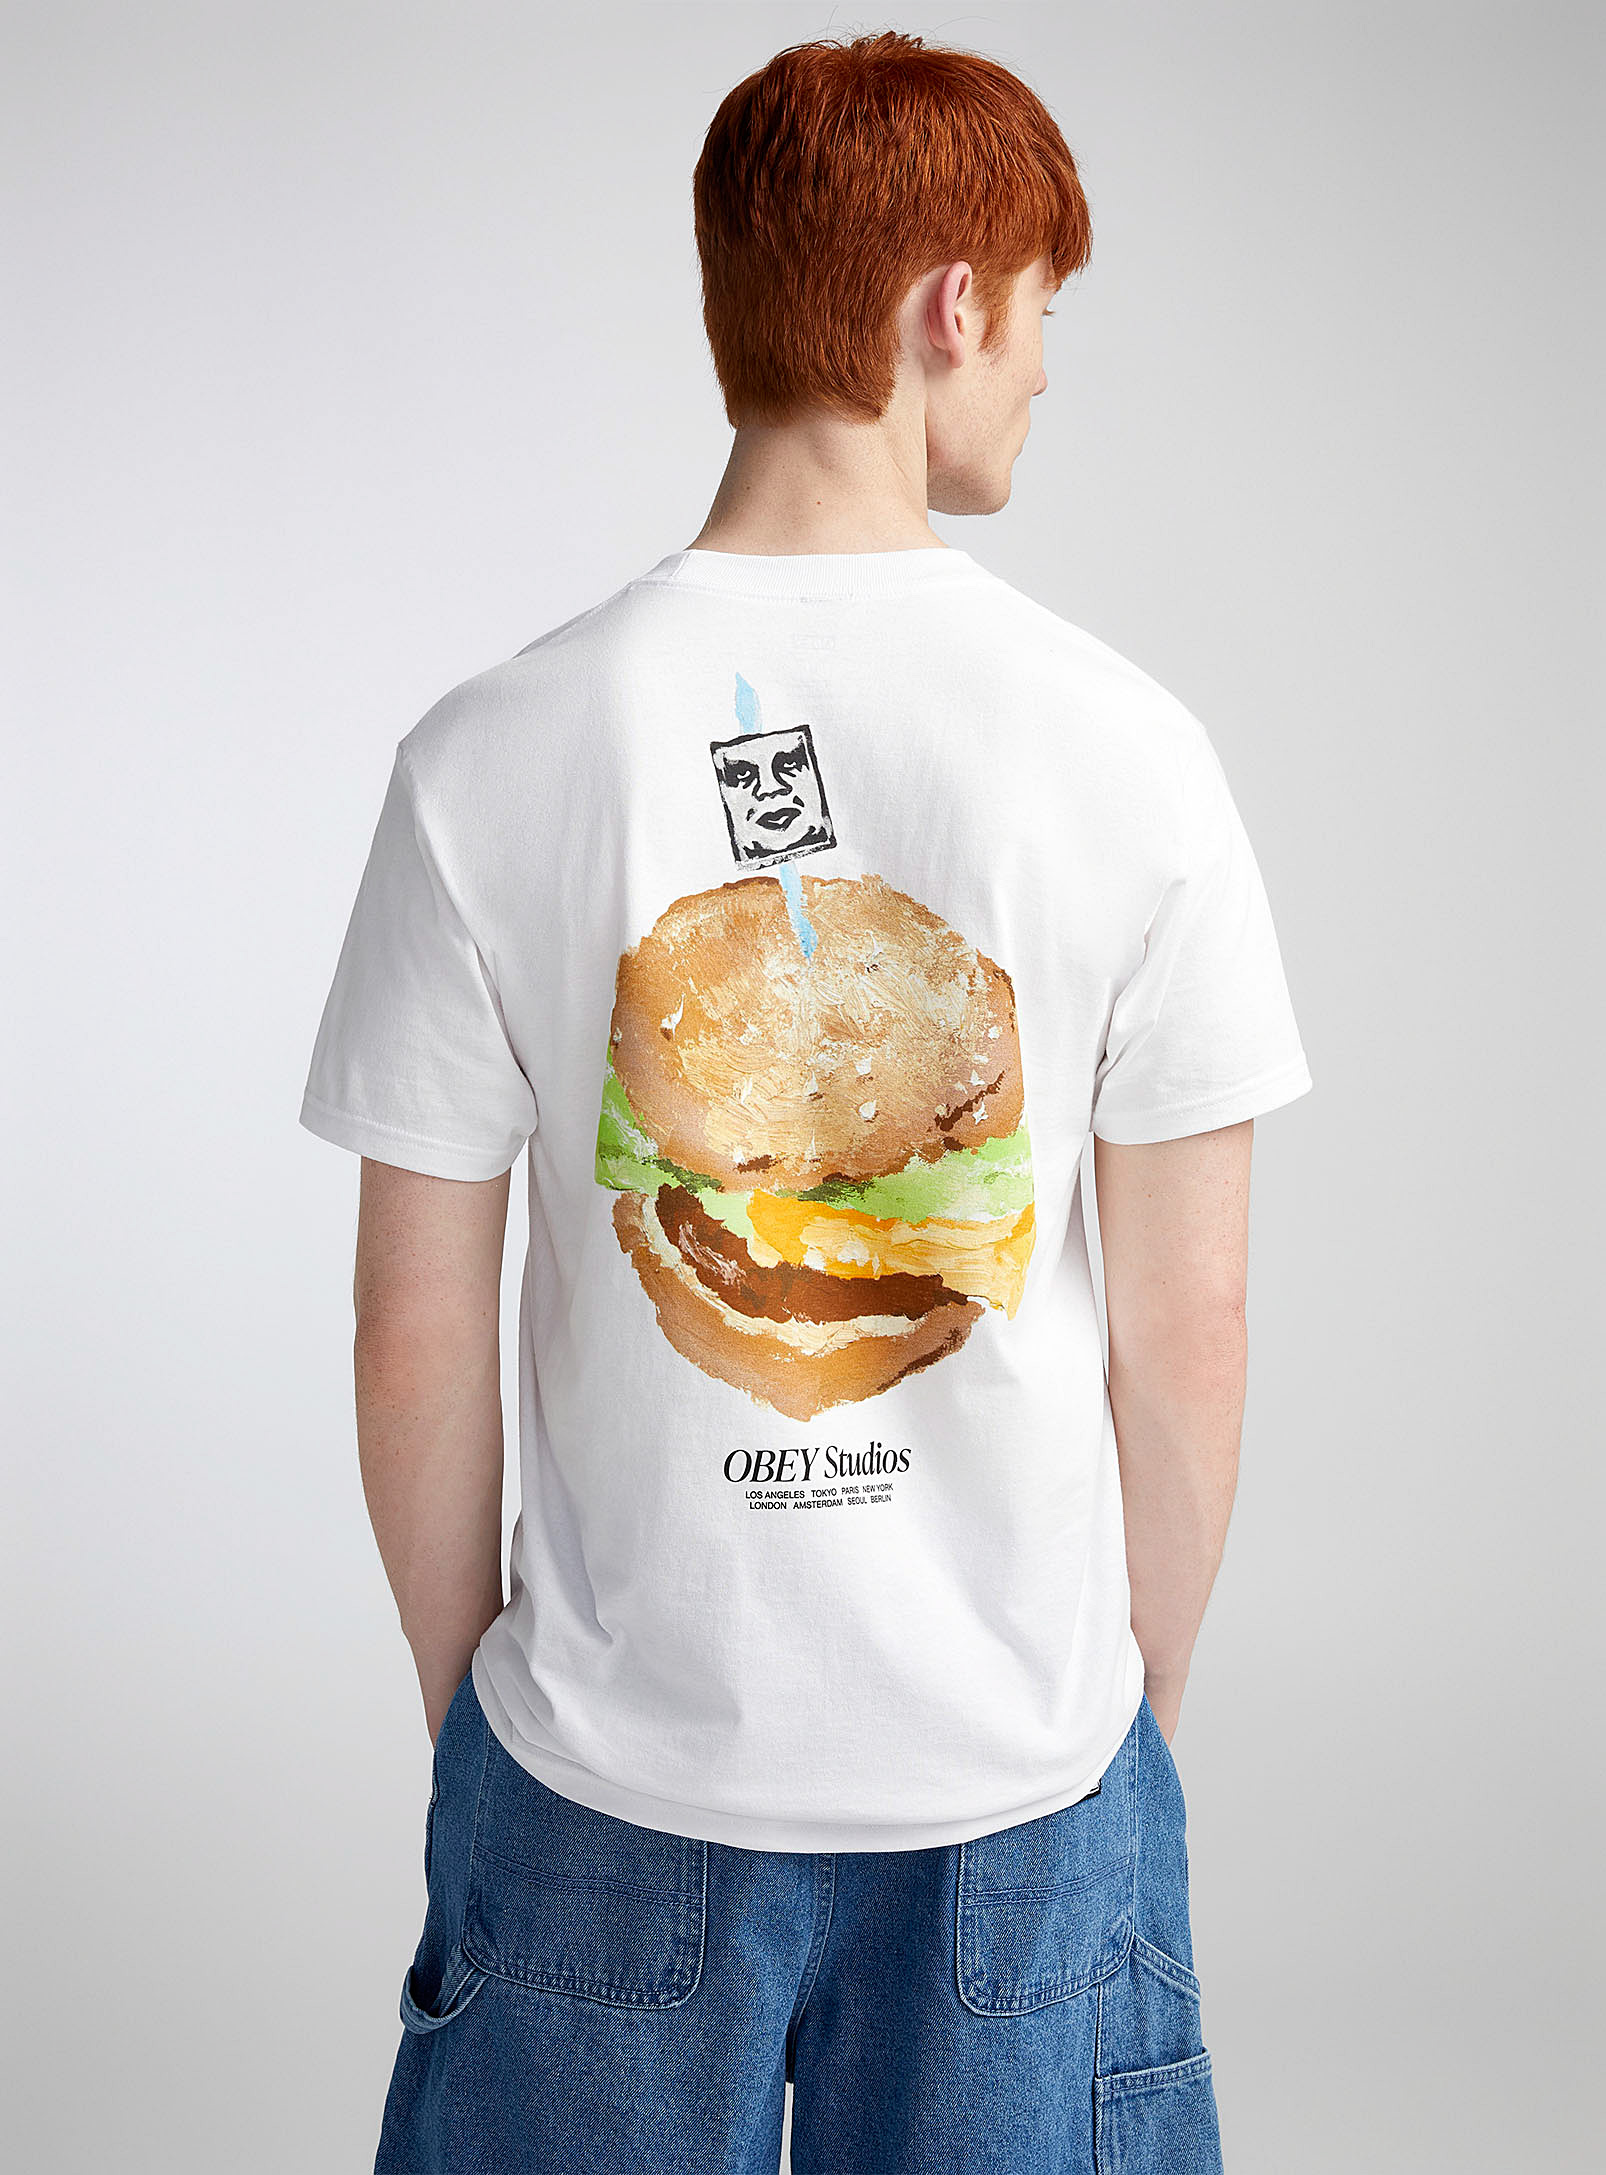 Obey - Men's Burger T-shirt